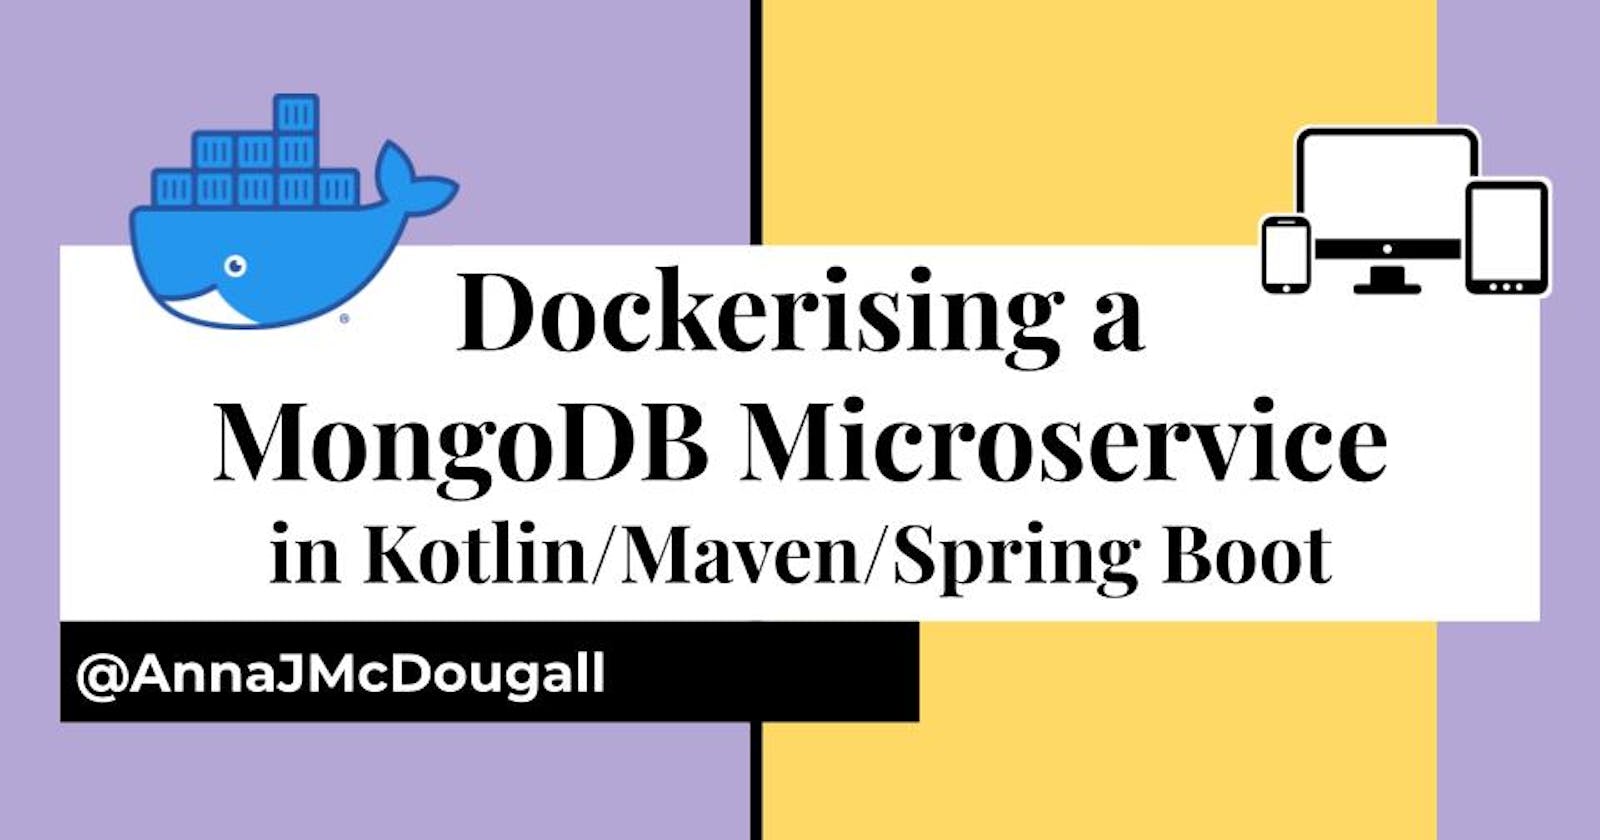 Dockerising a MongoDB Microservice in Kotlin/Maven/Spring Boot